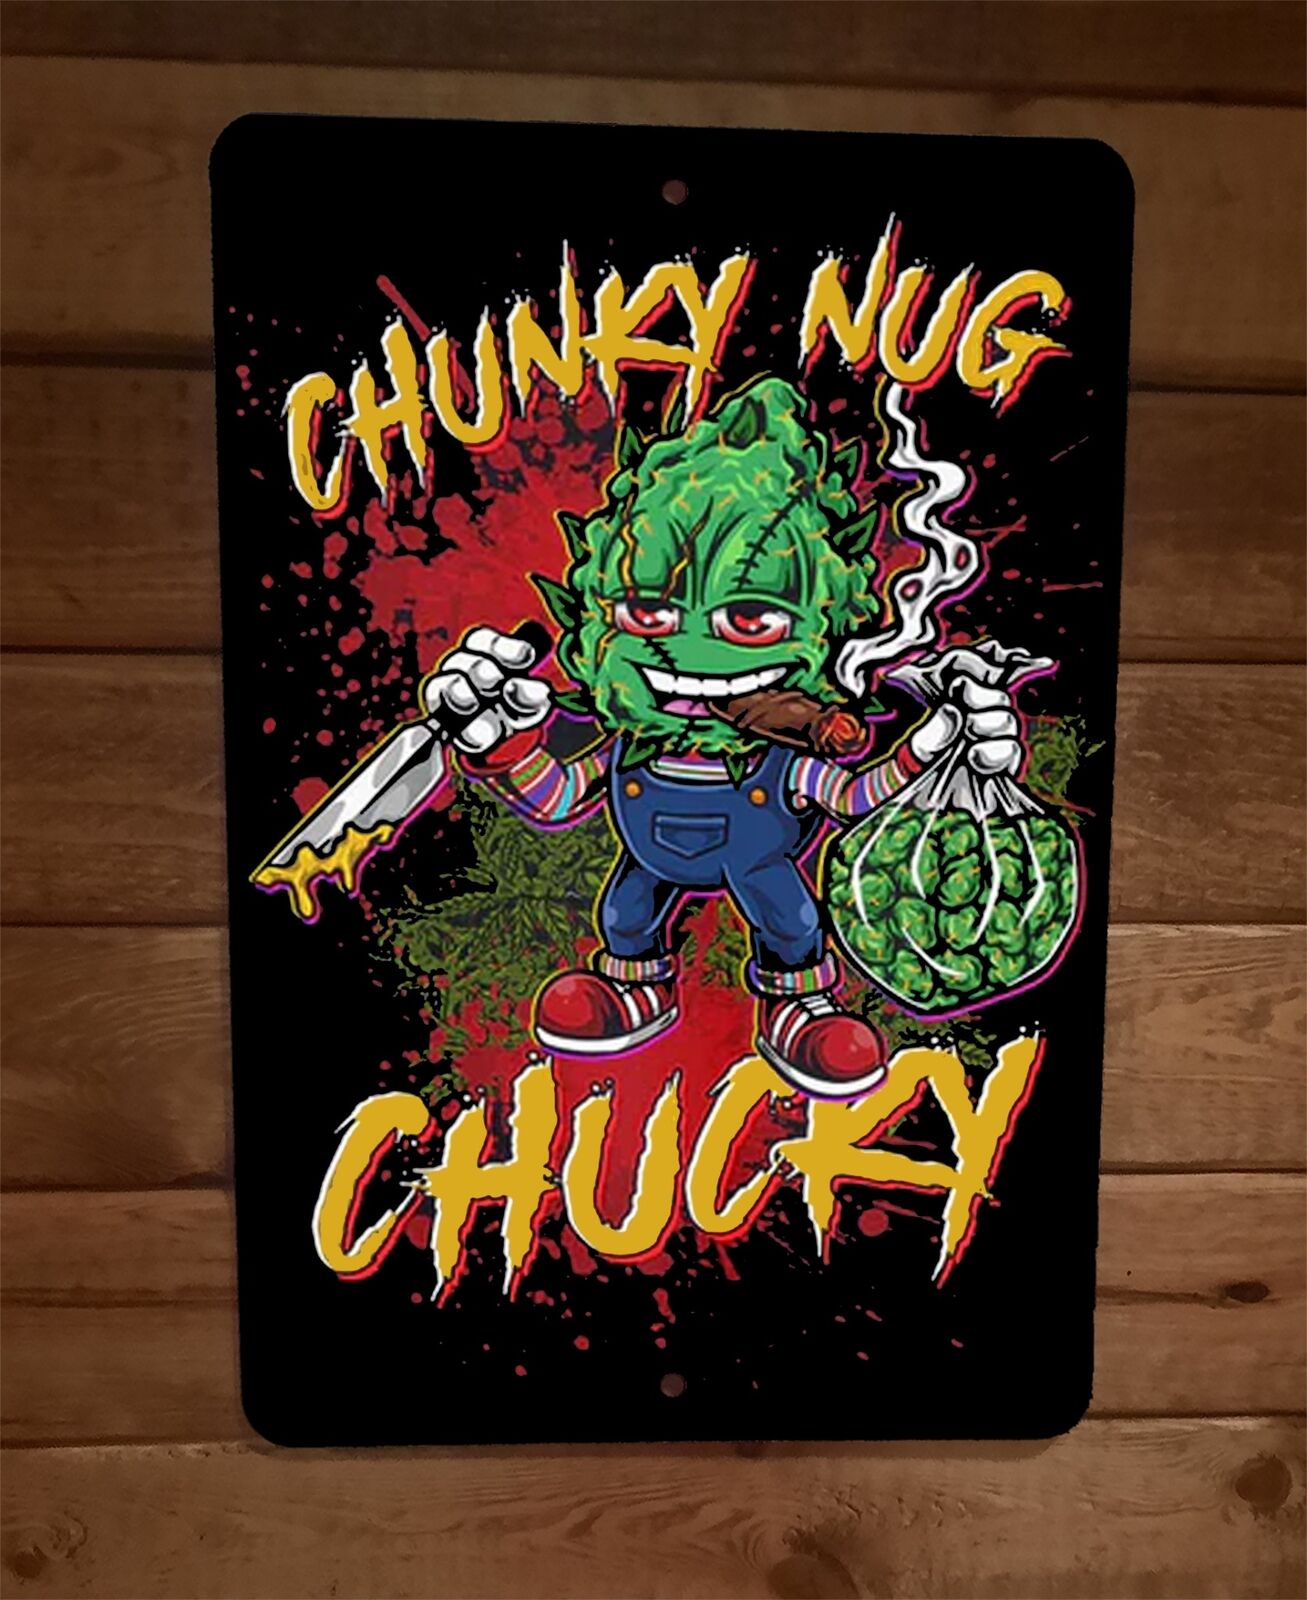 Chunky Nug Chucky 420 Mary Jane 8x12 Metal Wall Sign